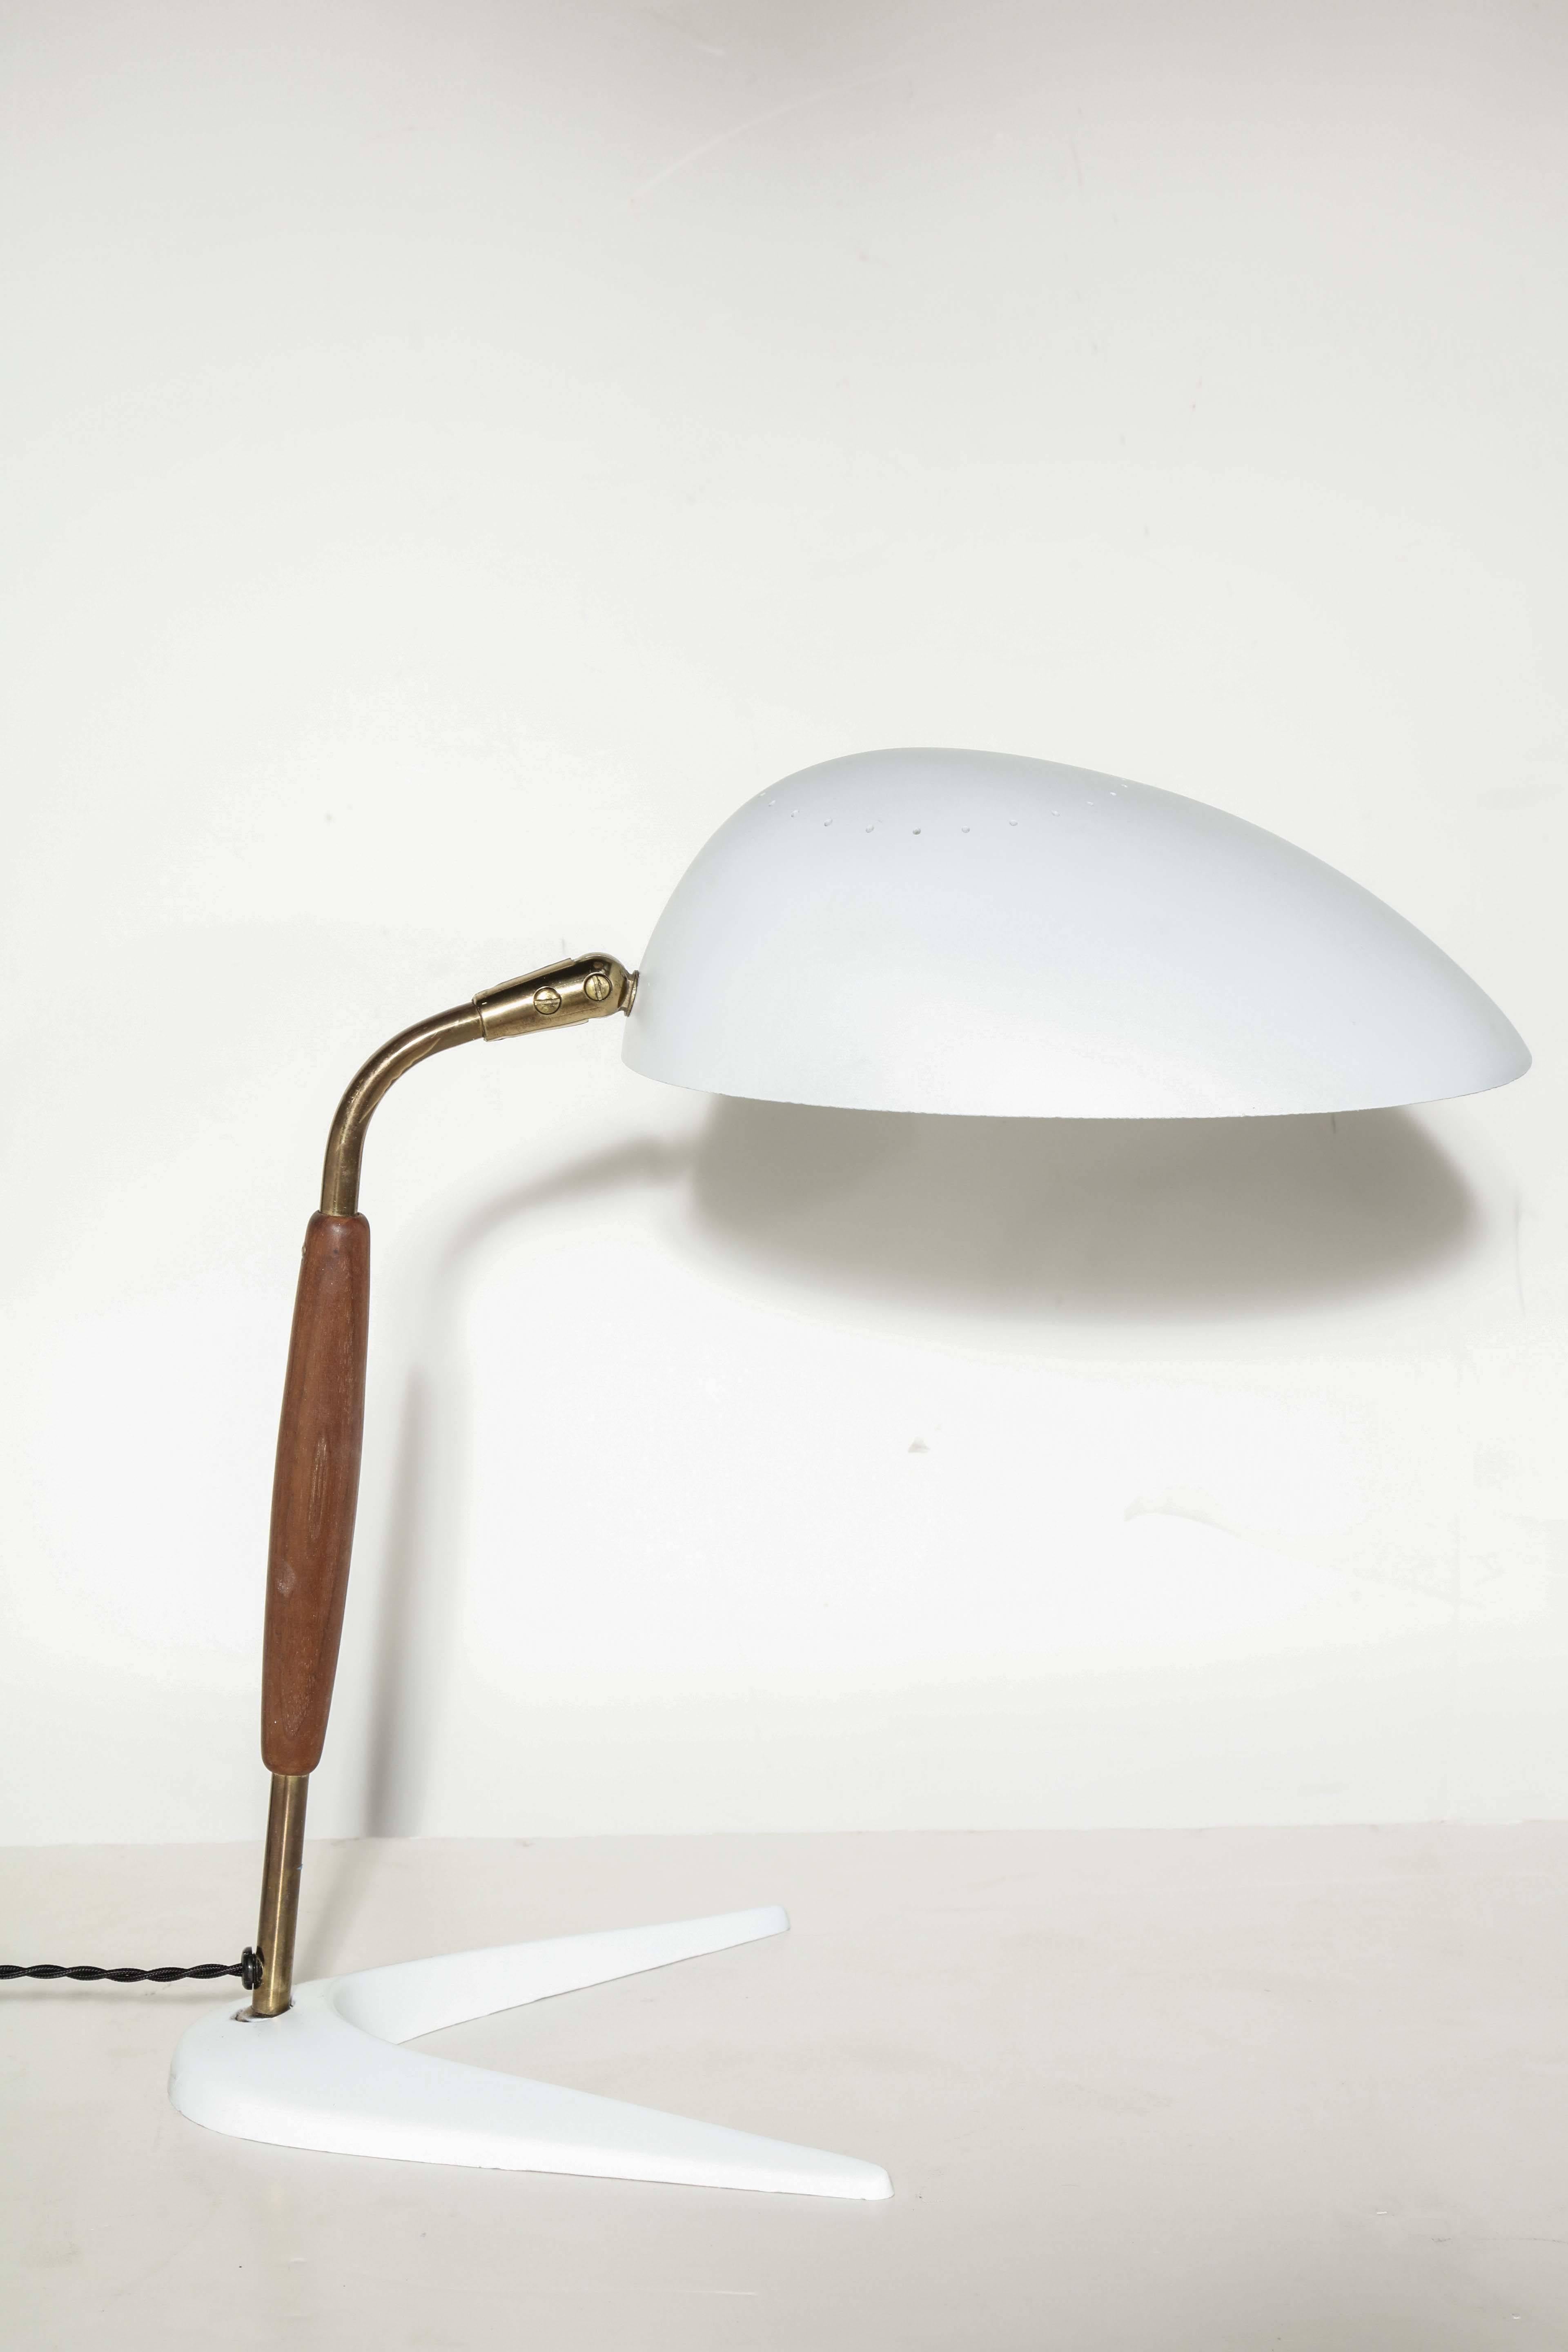 gerald thurston desk lamp